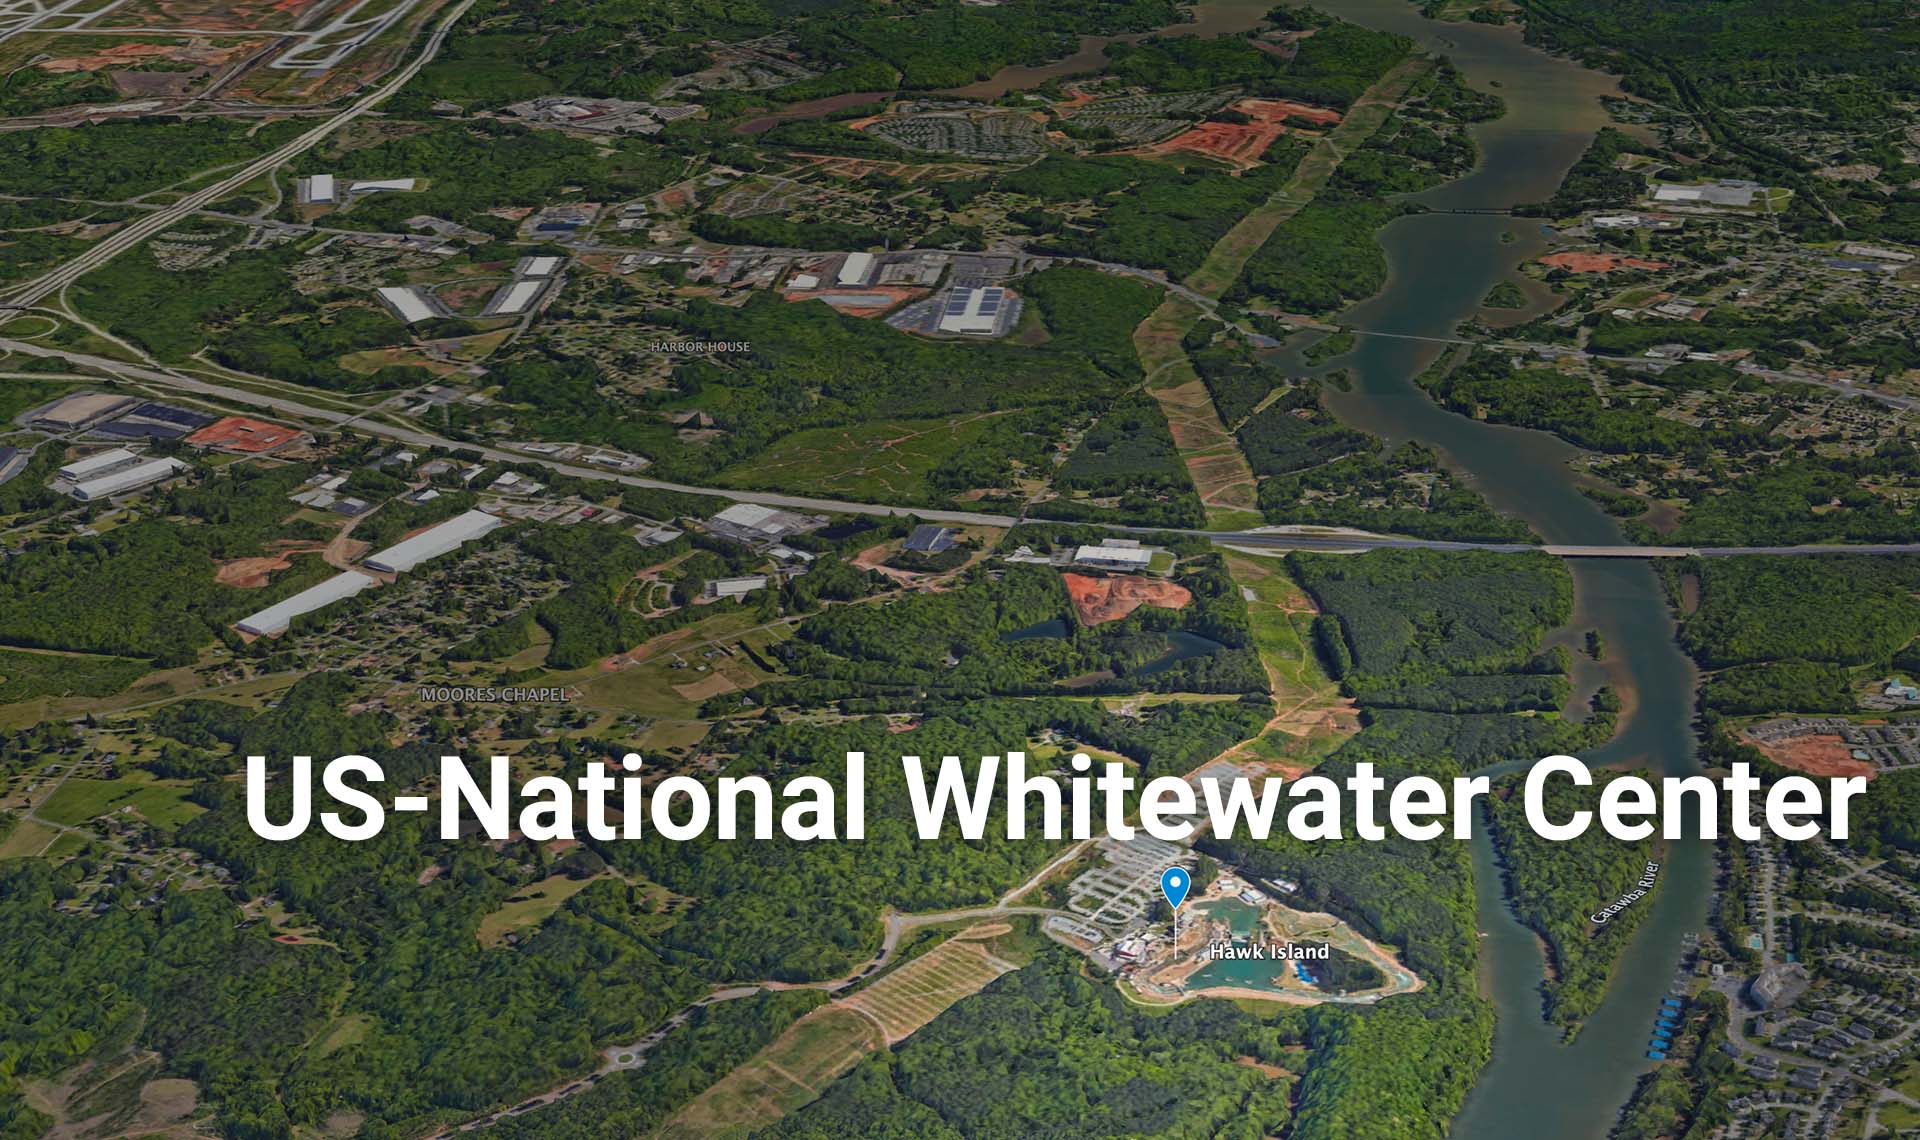 Lake Wylie Carolinas - US-National Whitewater Center